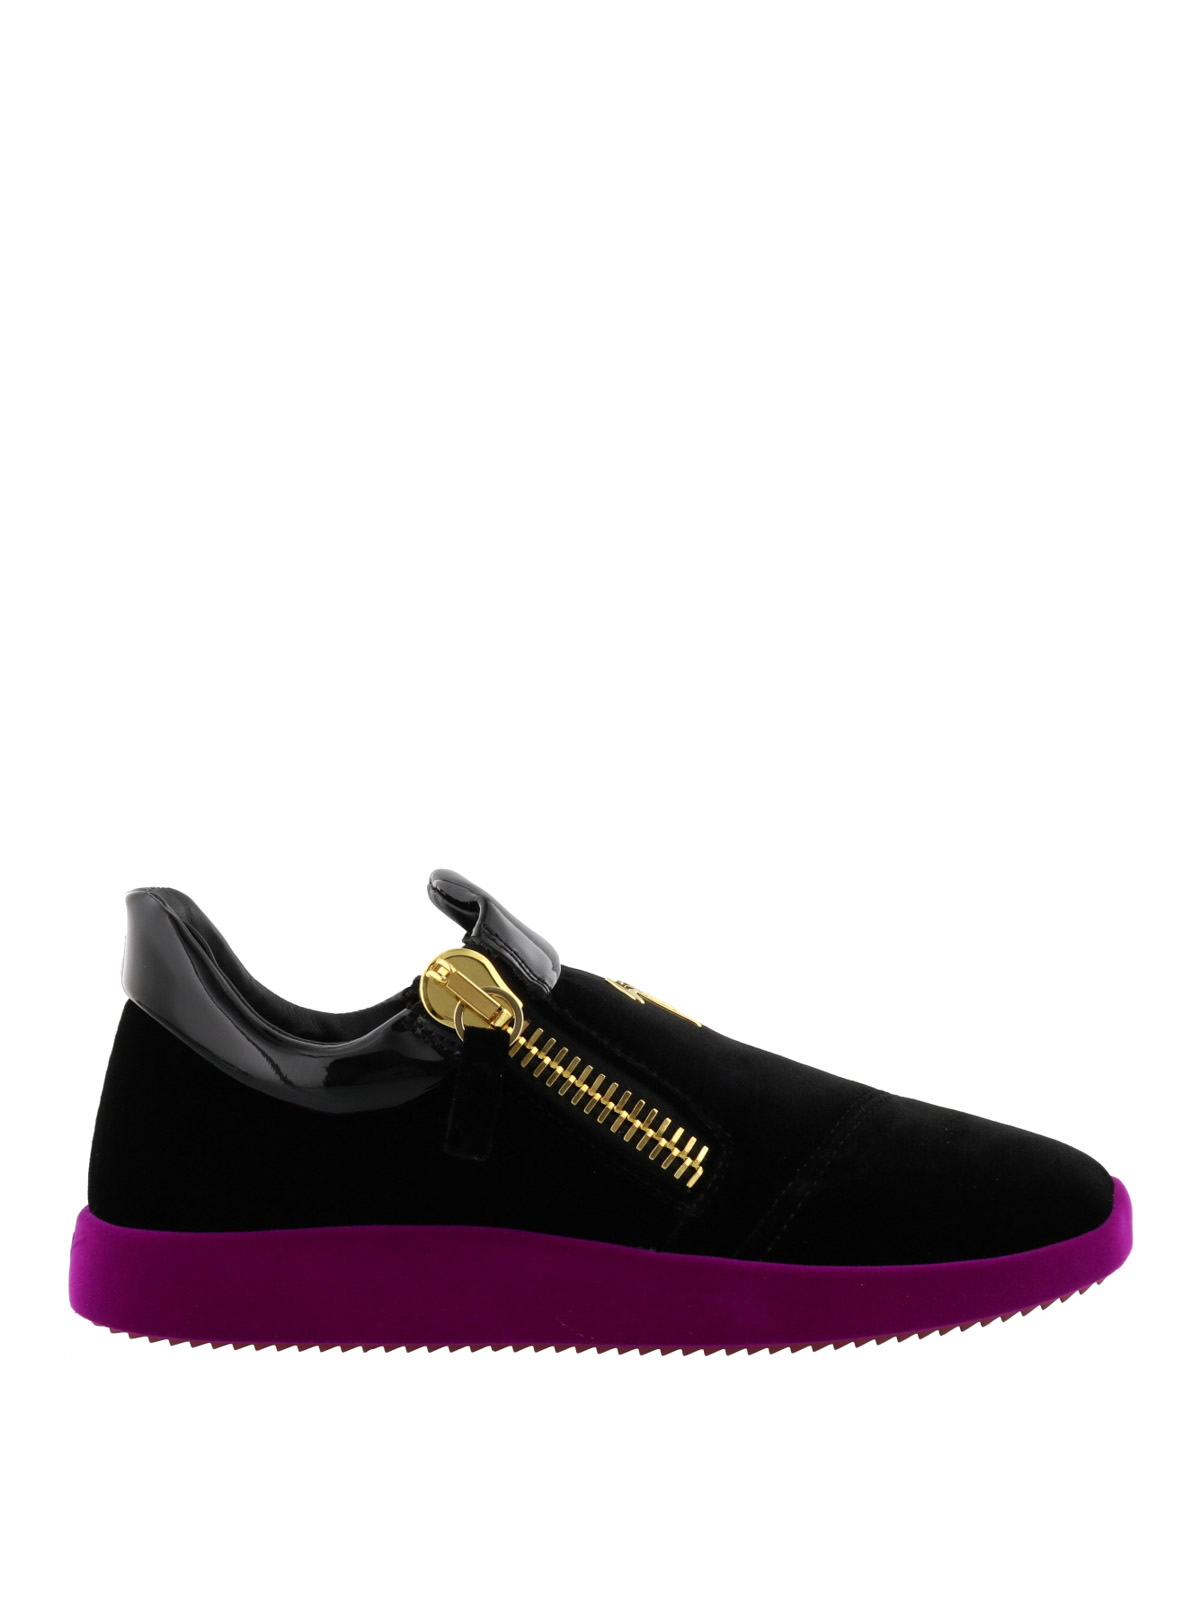 purple giuseppe sneakers